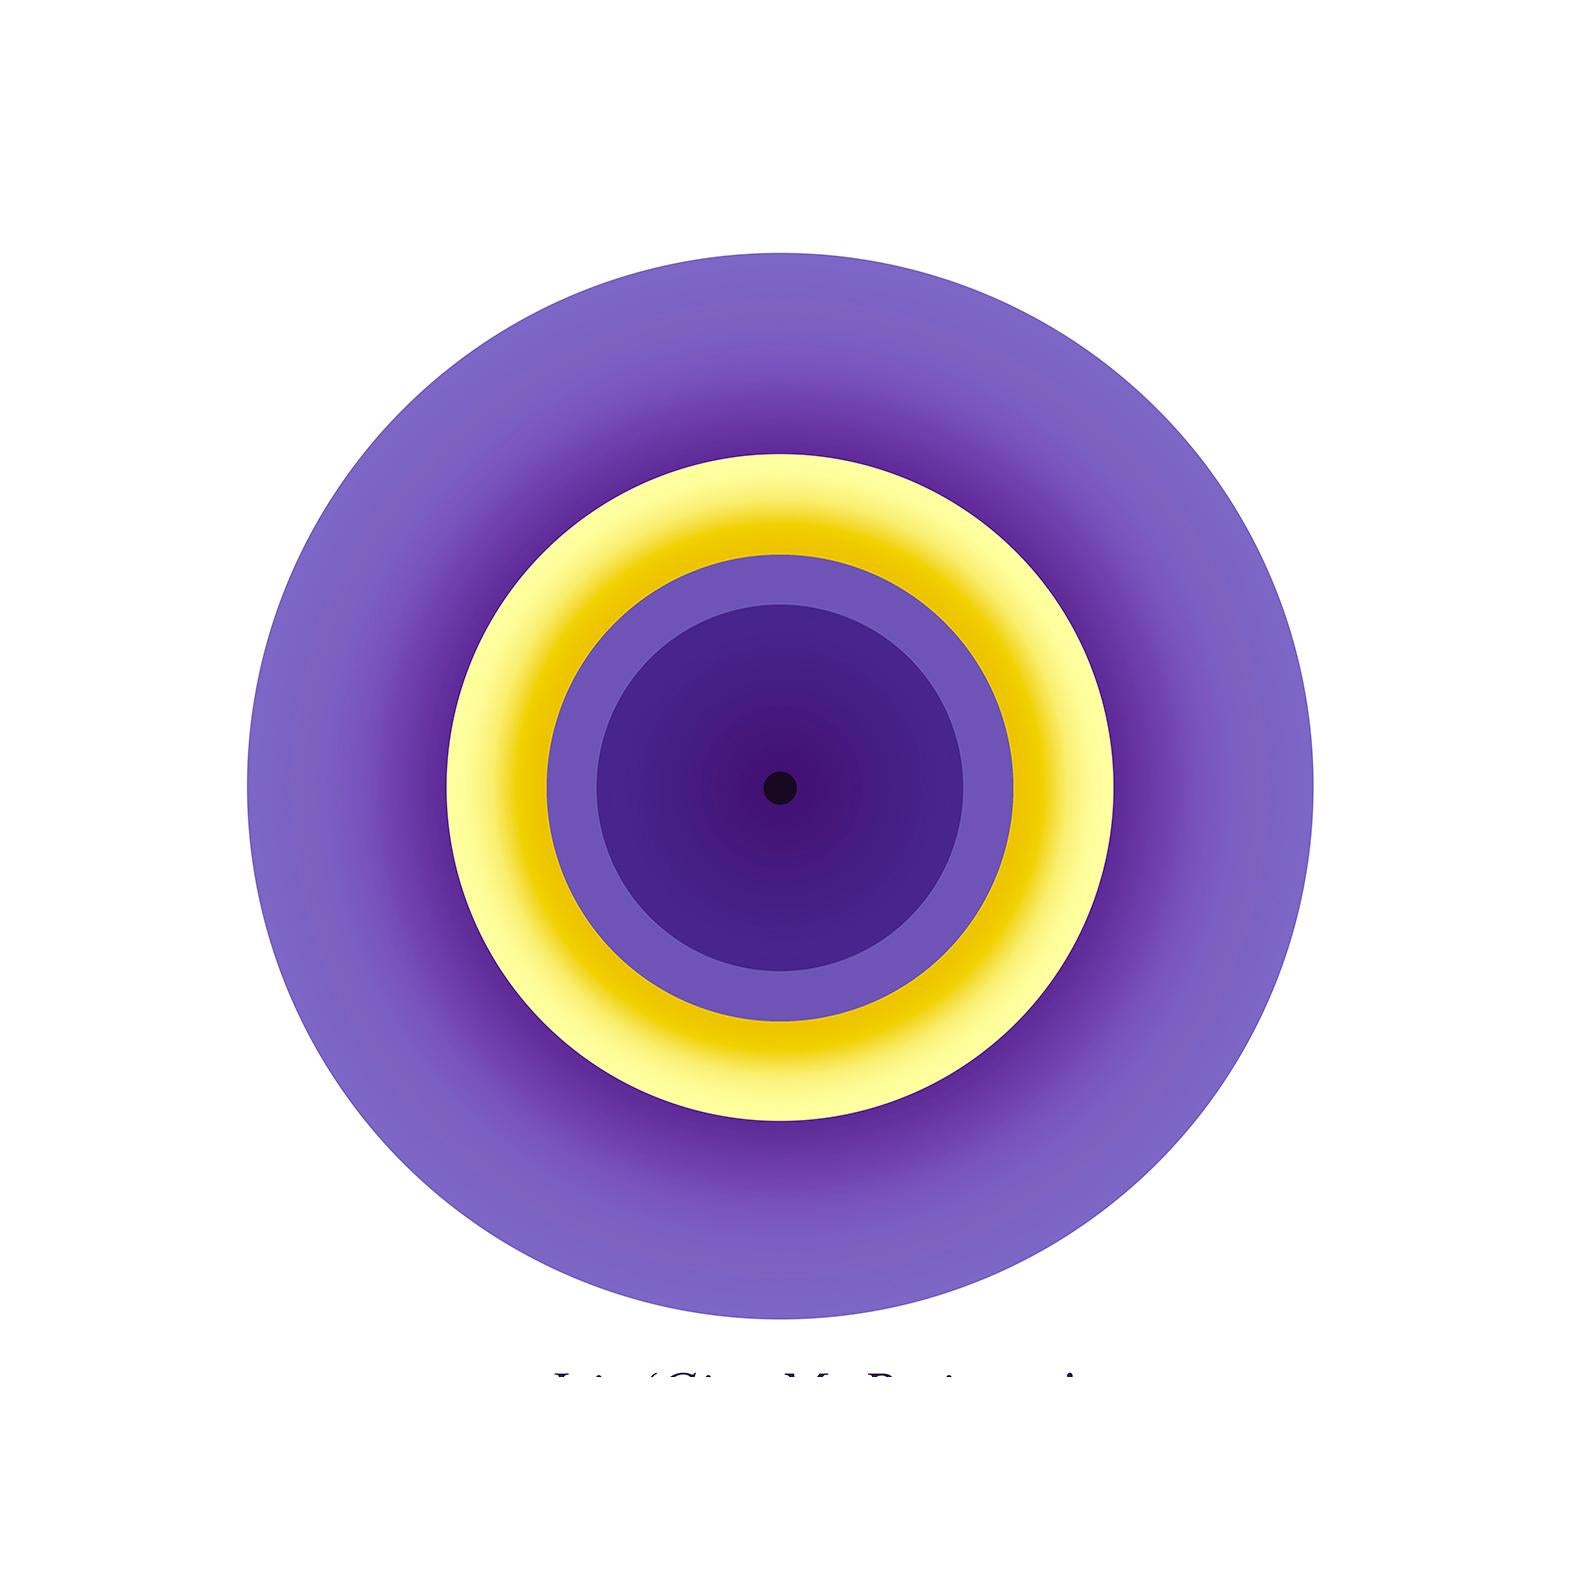 Iris "Dame paciencia", Giles Revell - Fotografía abstracta, Fotografía en color